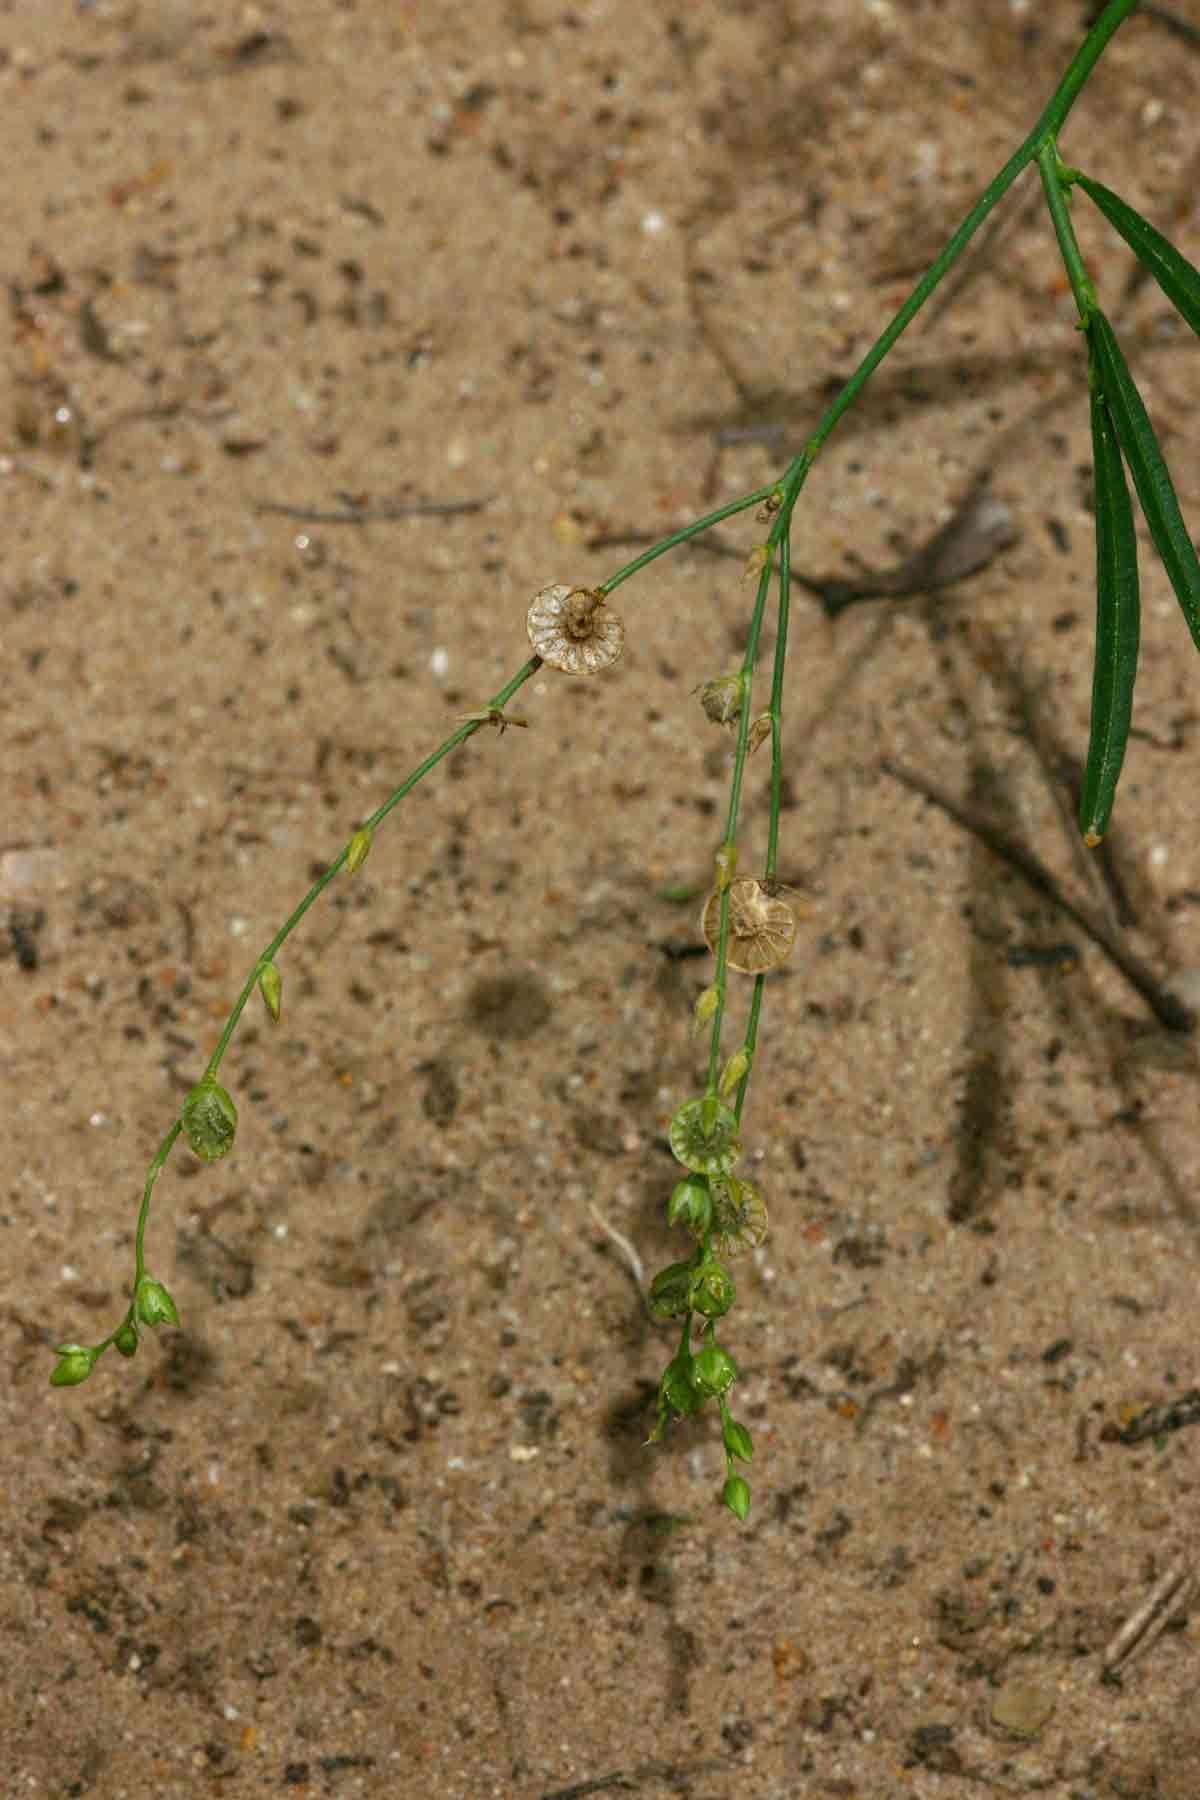 Image of carpet-weeds